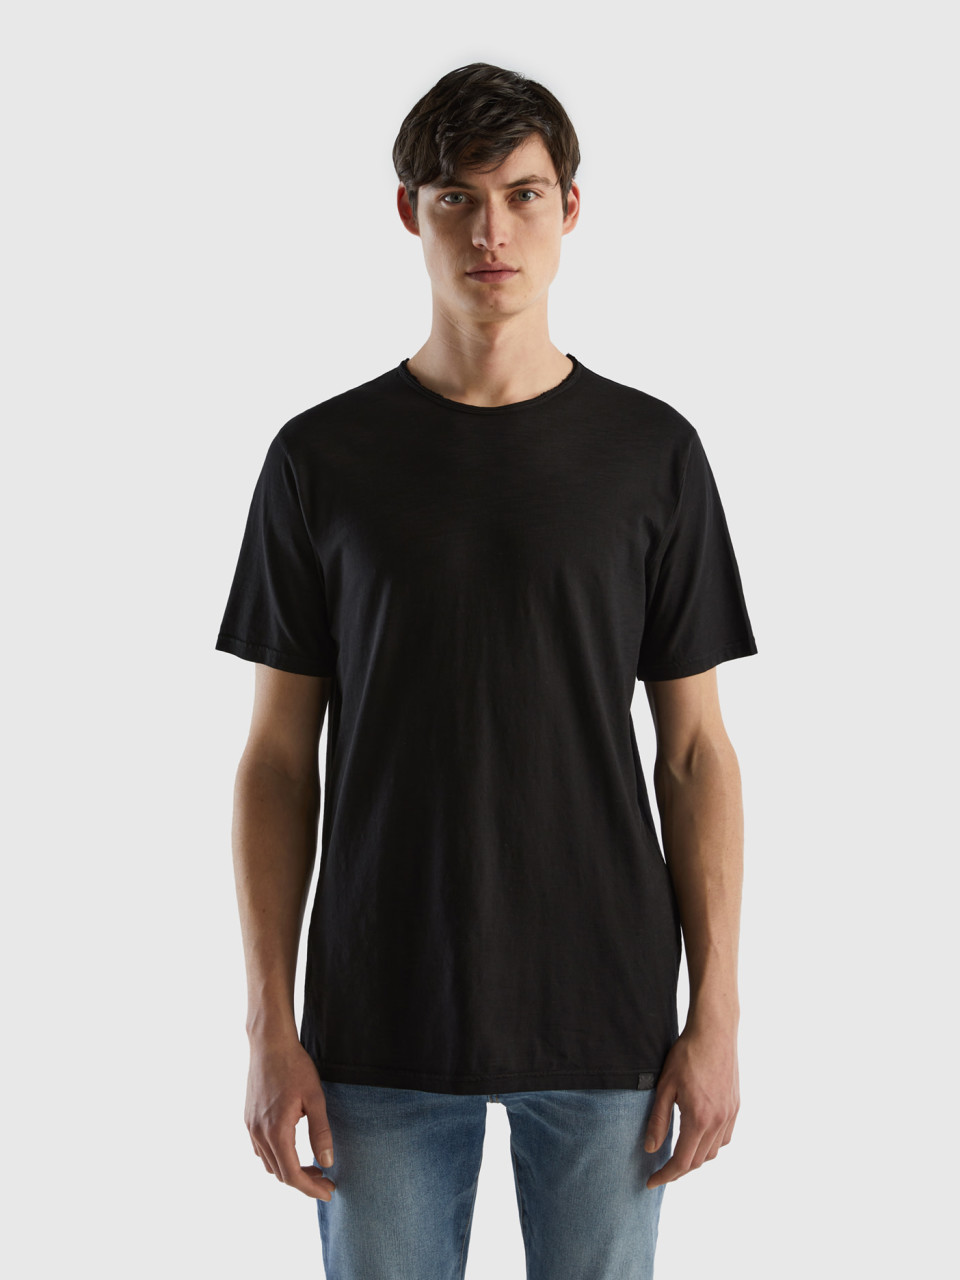 Benetton, Black T-shirt In Slub Cotton, Black, Men